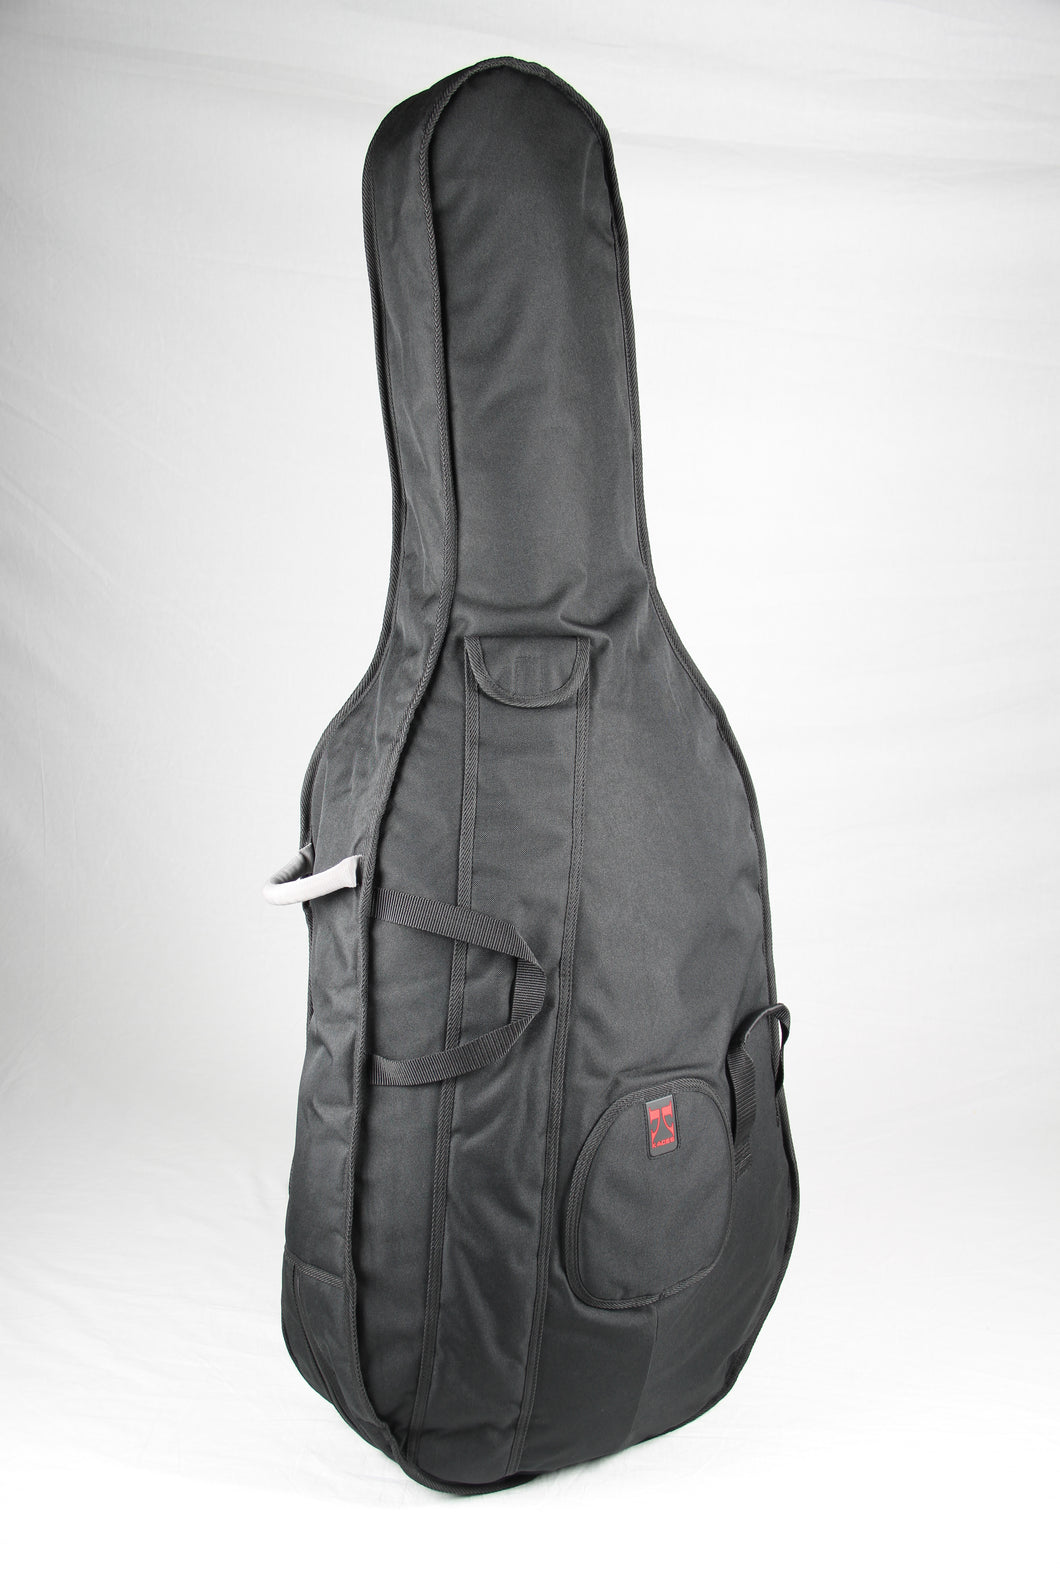 University Series 3/4 Size Cello Bag